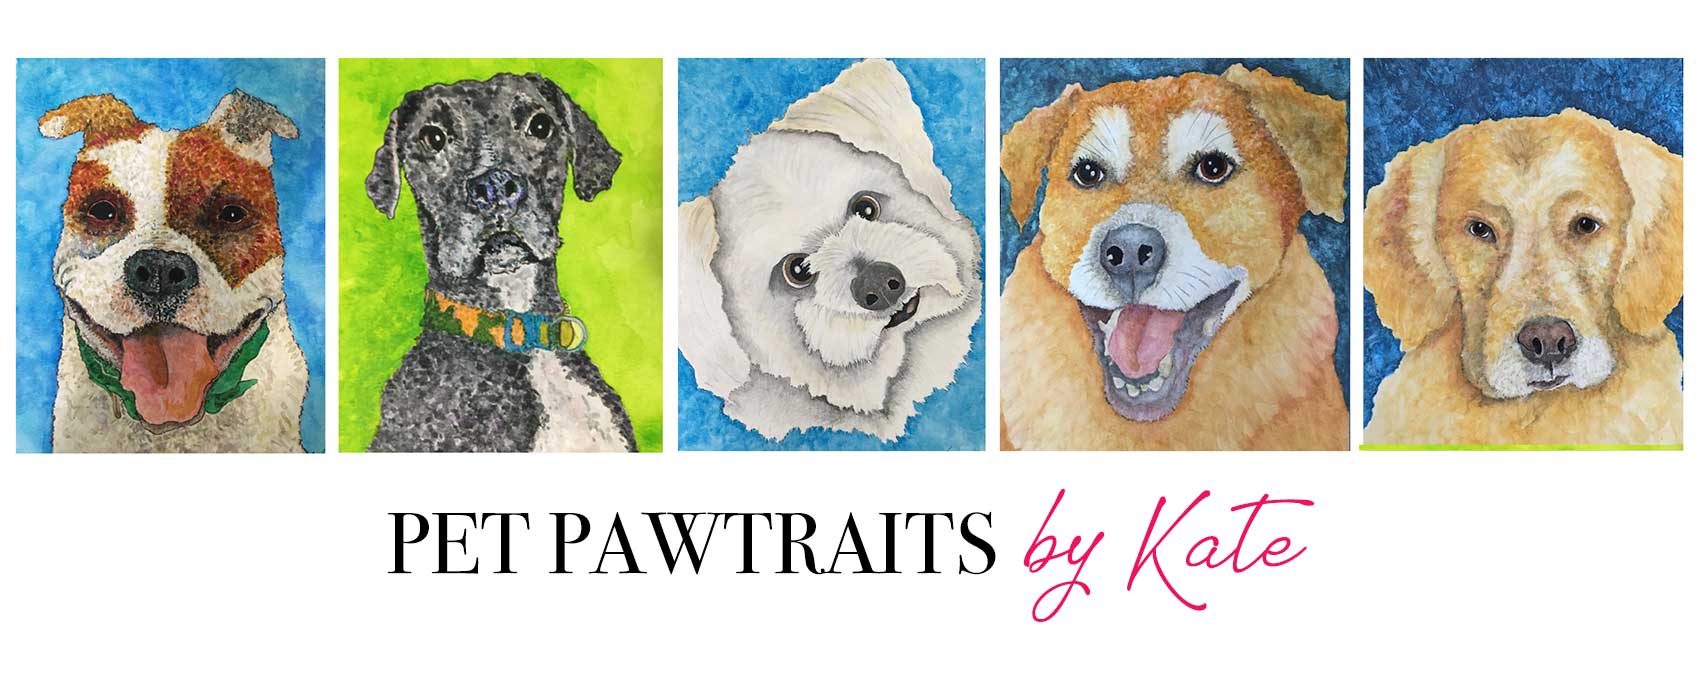 Pet Pawtraits by Kate